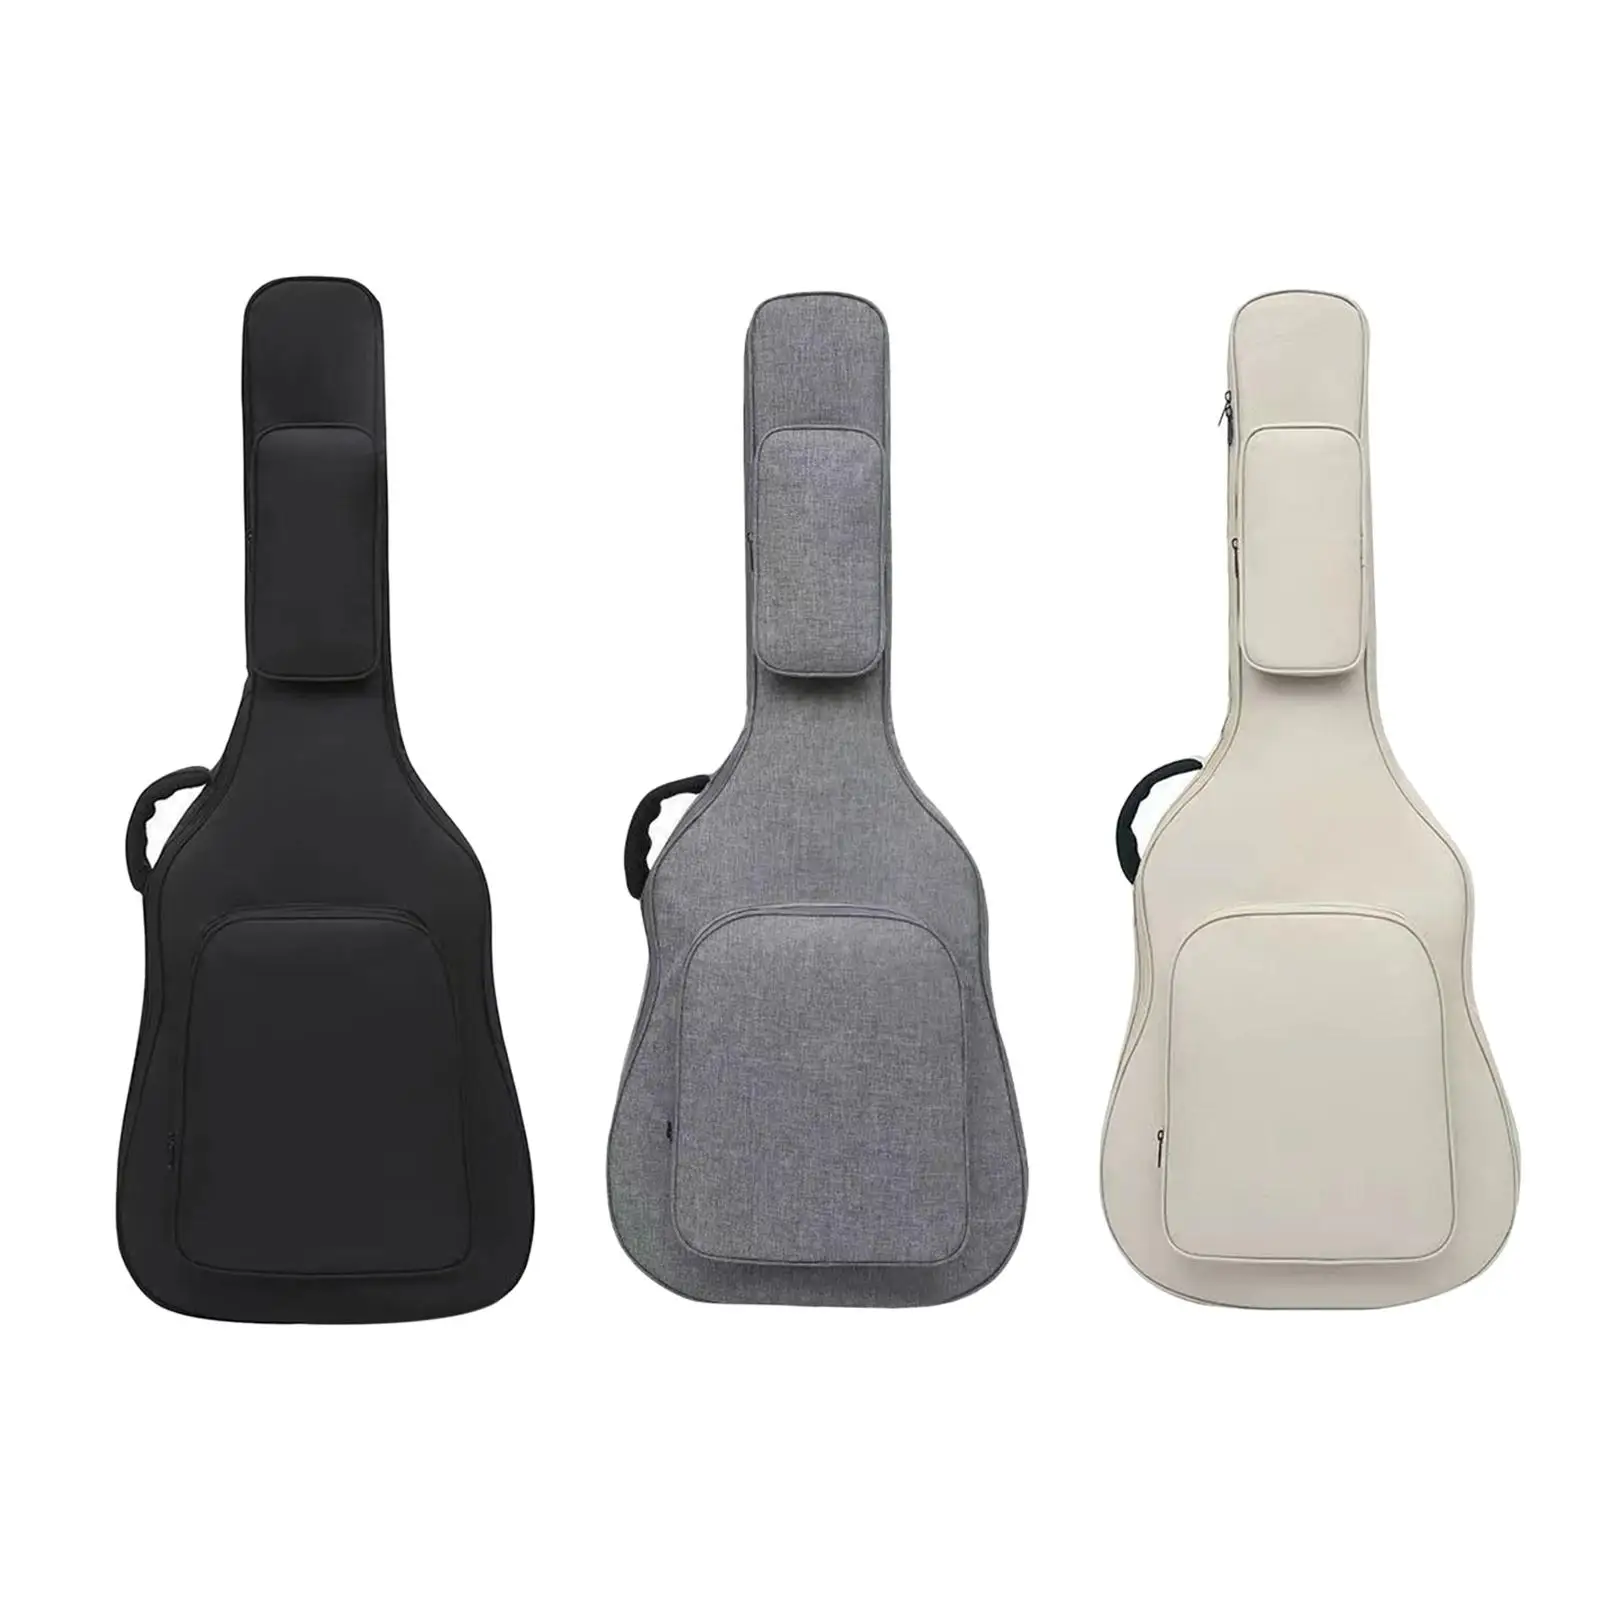 41inch Electric Guitar Bag with Pockets Carry Case Guitar Gig Adjustable Shoulder Strap Backpack for Music Instrument Bass